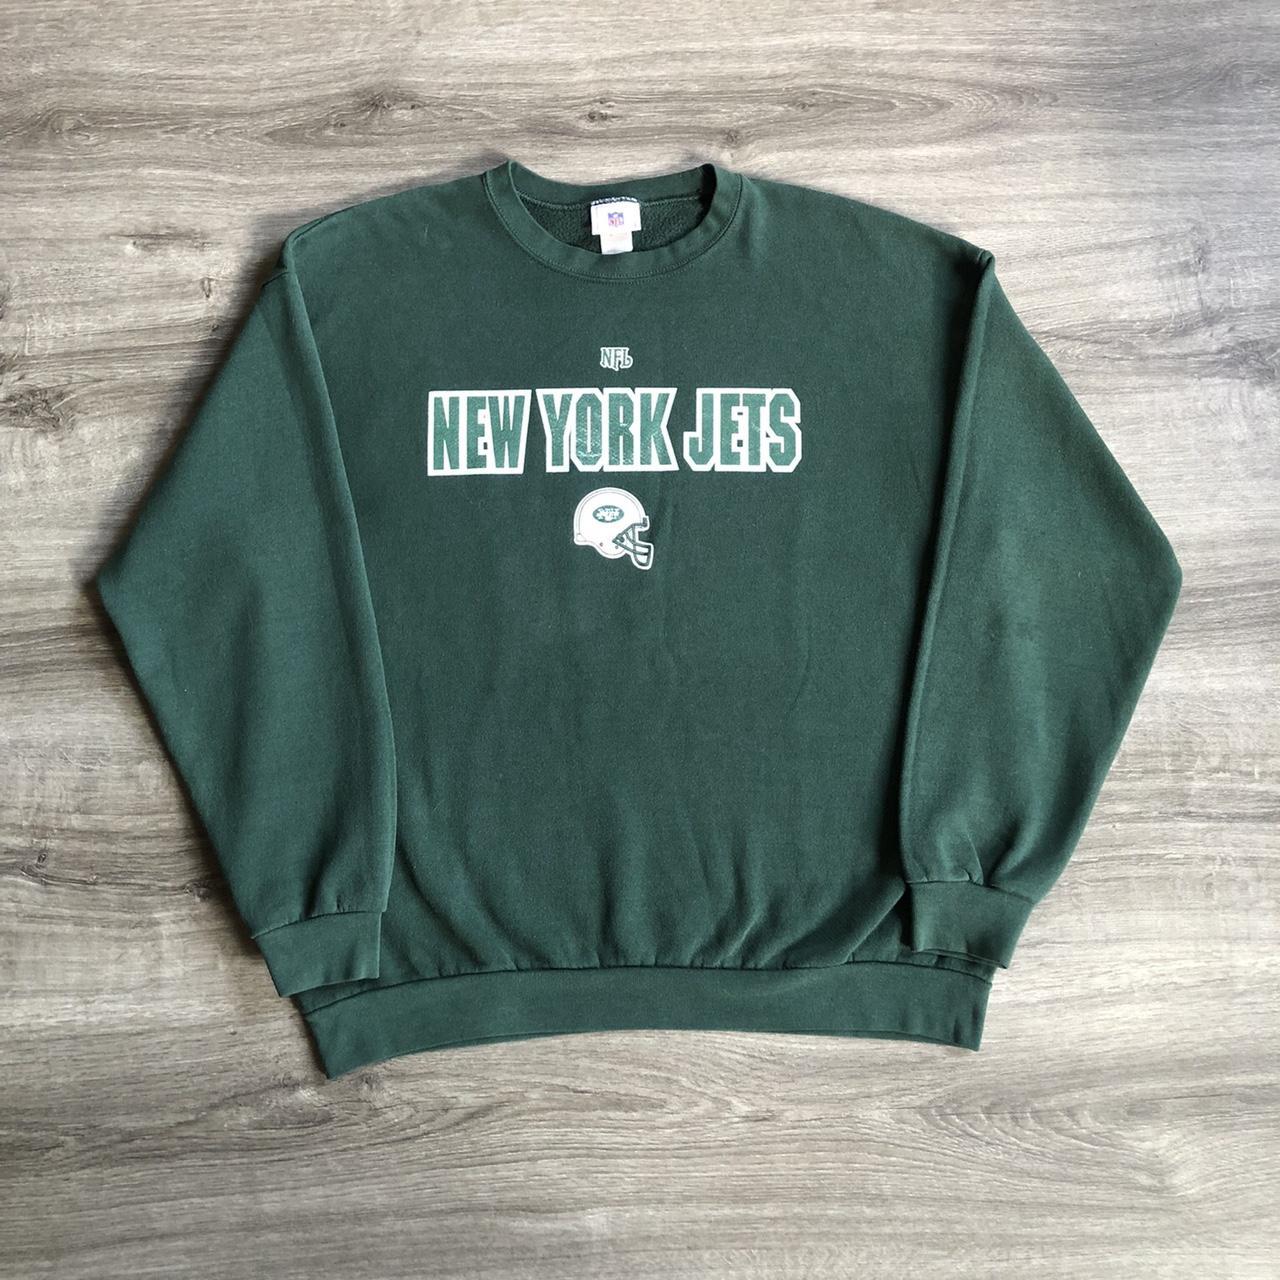 Vintage New York jets crewneck sweater. #newyork... - Depop